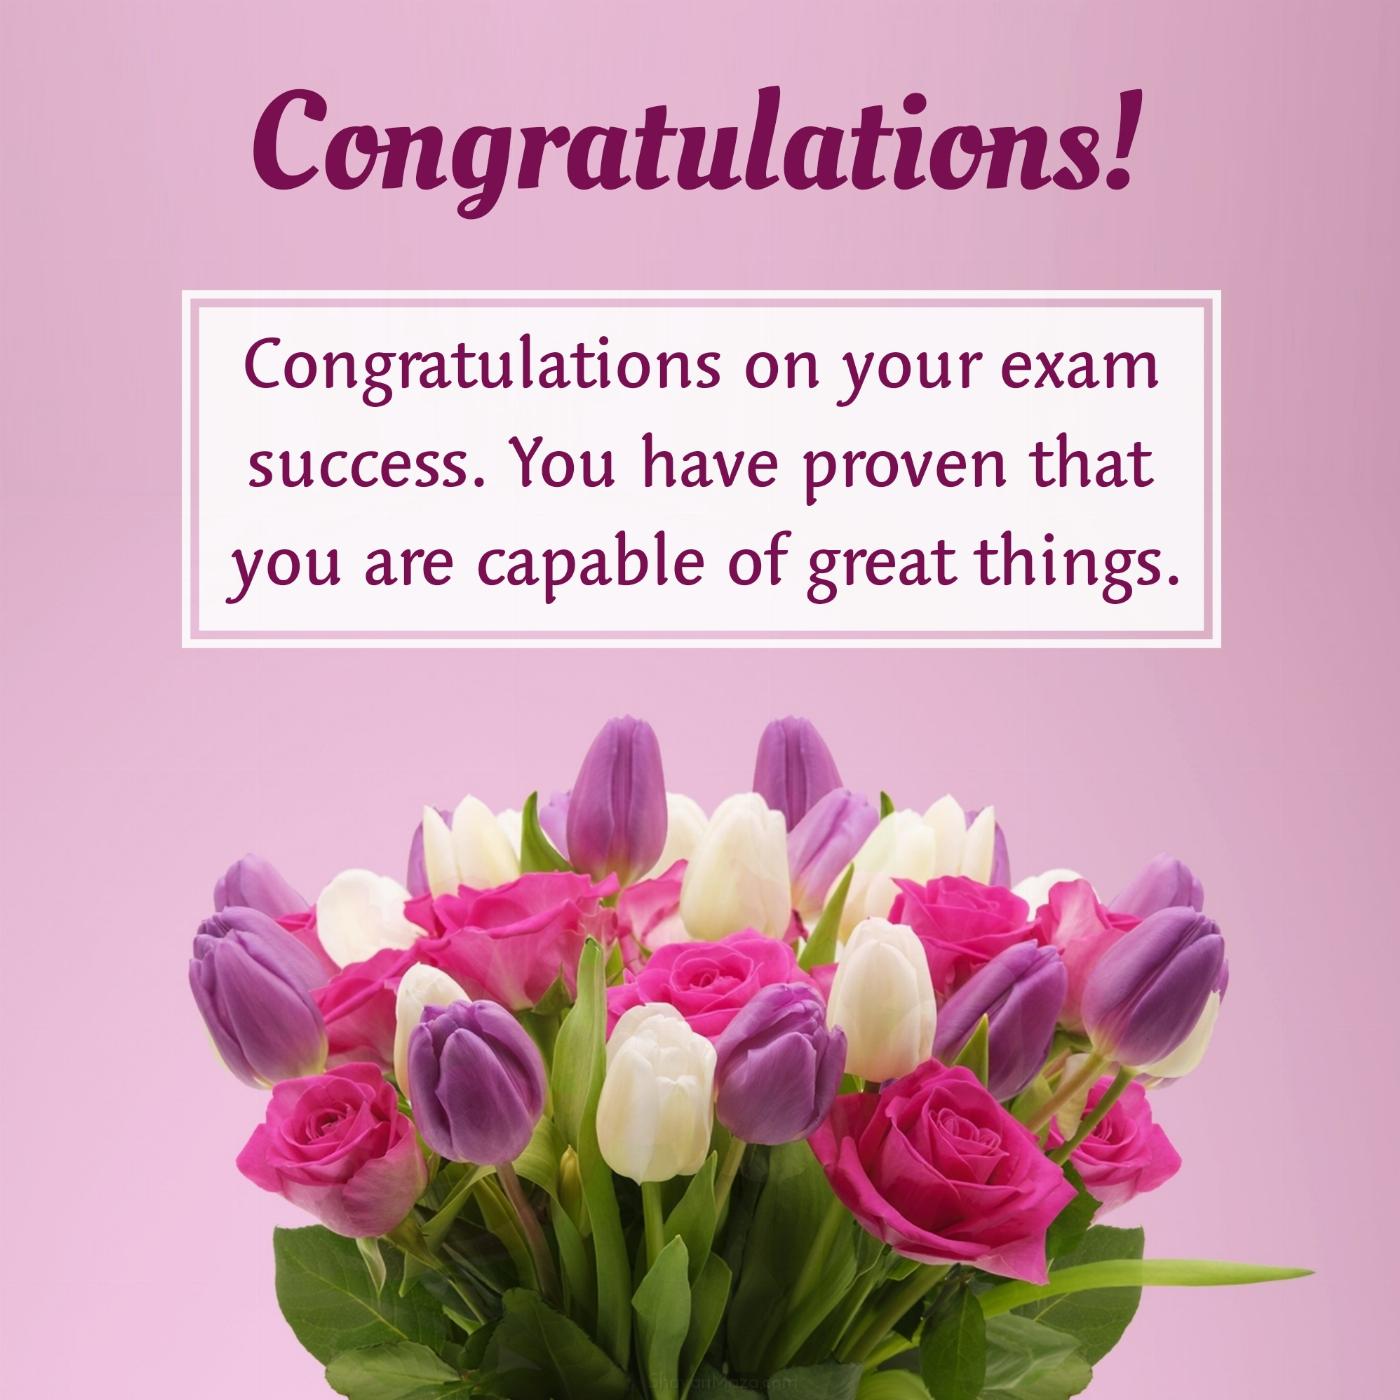 Congratulations on your exam success